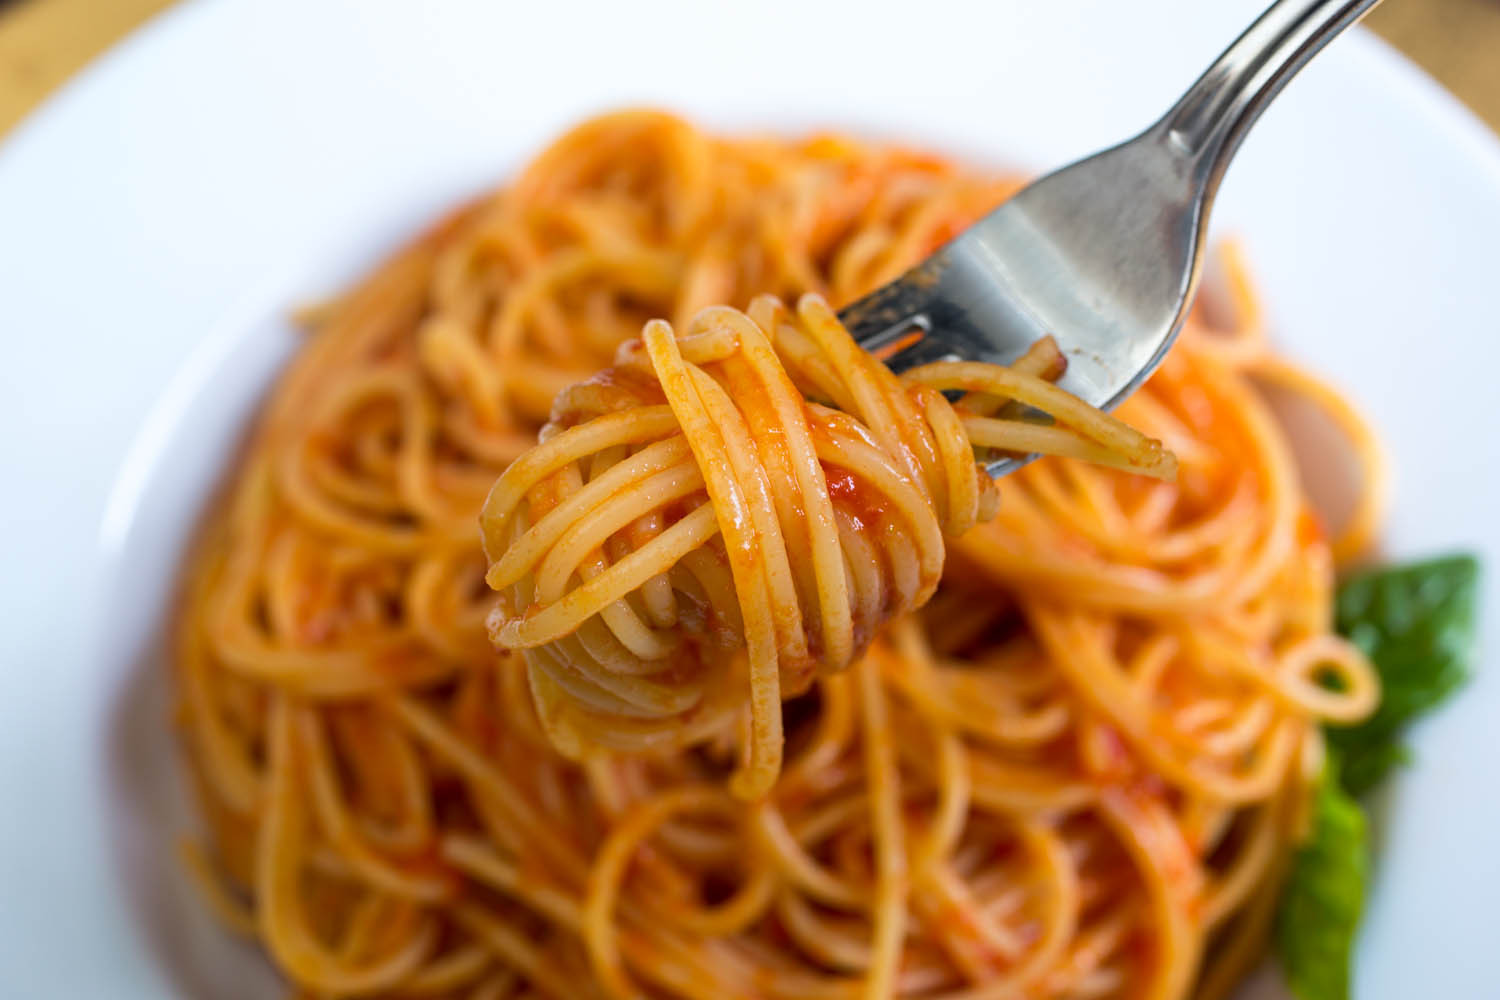 Homemade Spaghetti Sauce From Fresh Tomatoes
 How to Make the Best Tomato Sauce From Fresh Tomatoes